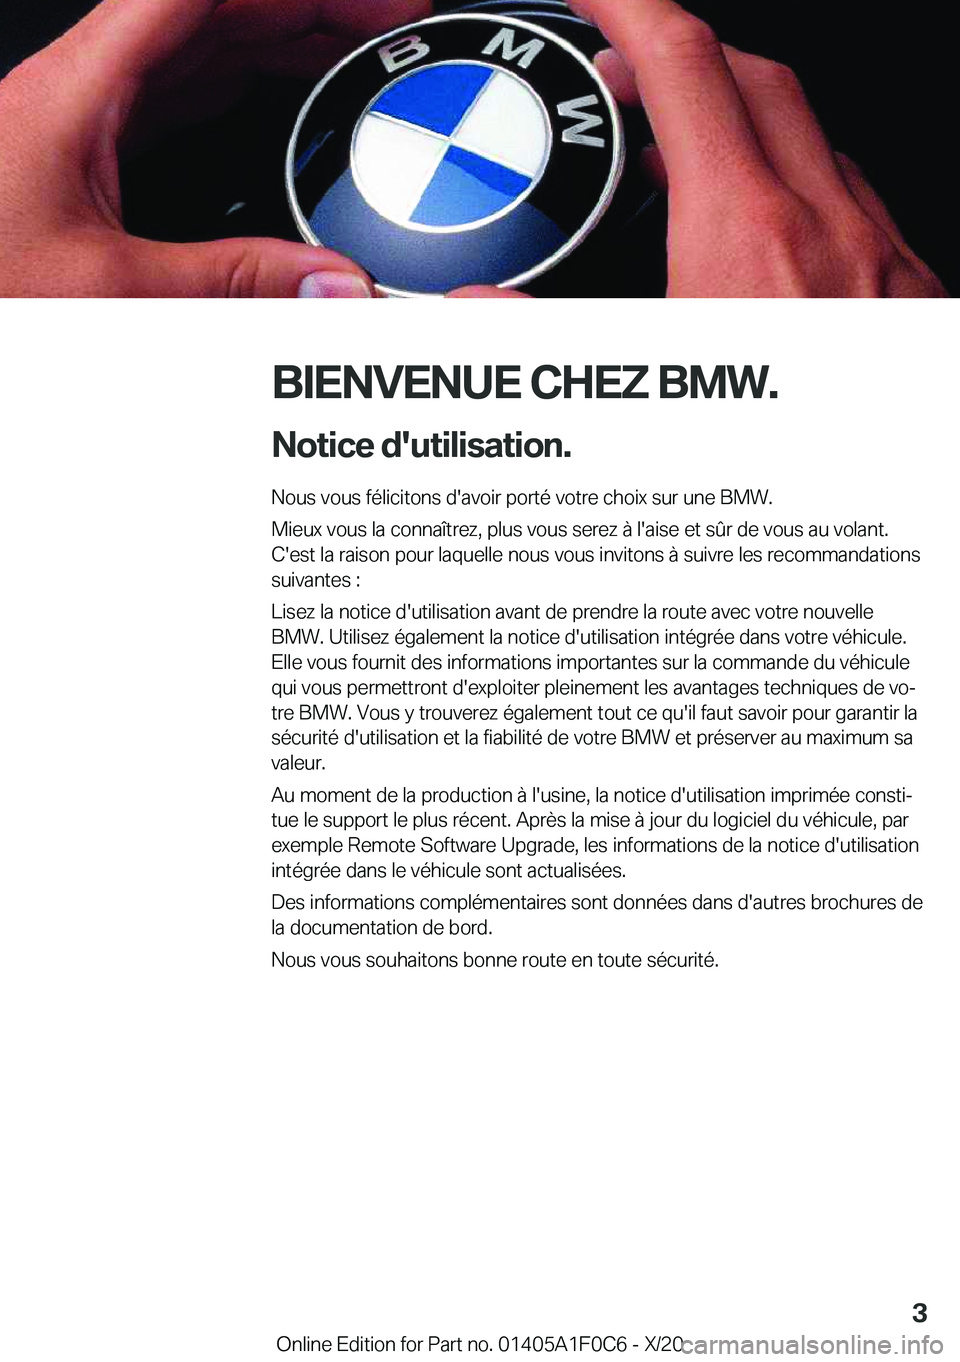 BMW X6 2021  Notices Demploi (in French) �B�I�E�N�V�E�N�U�E��C�H�E�Z��B�M�W�.�N�o�t�i�c�e��d�'�u�t�i�l�i�s�a�t�i�o�n�.
�N�o�u�s��v�o�u�s��f�é�l�i�c�i�t�o�n�s��d�'�a�v�o�i�r��p�o�r�t�é��v�o�t�r�e��c�h�o�i�x��s�u�r��u�n�e�